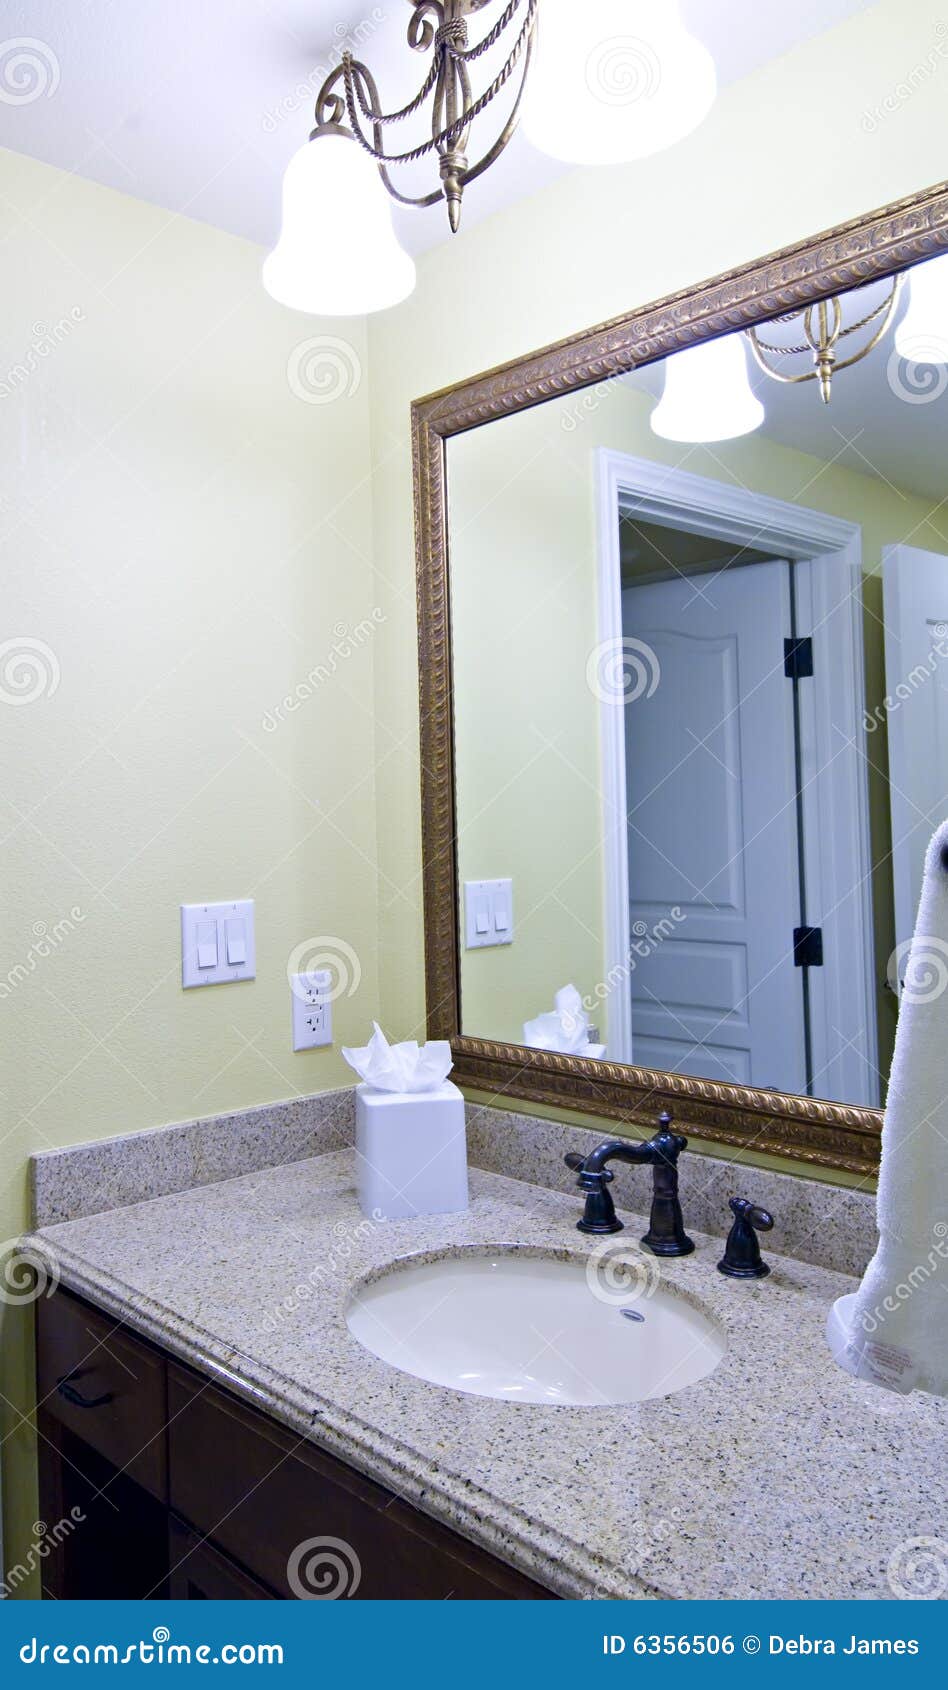 luxurious hotel bathroom vanity and mirror